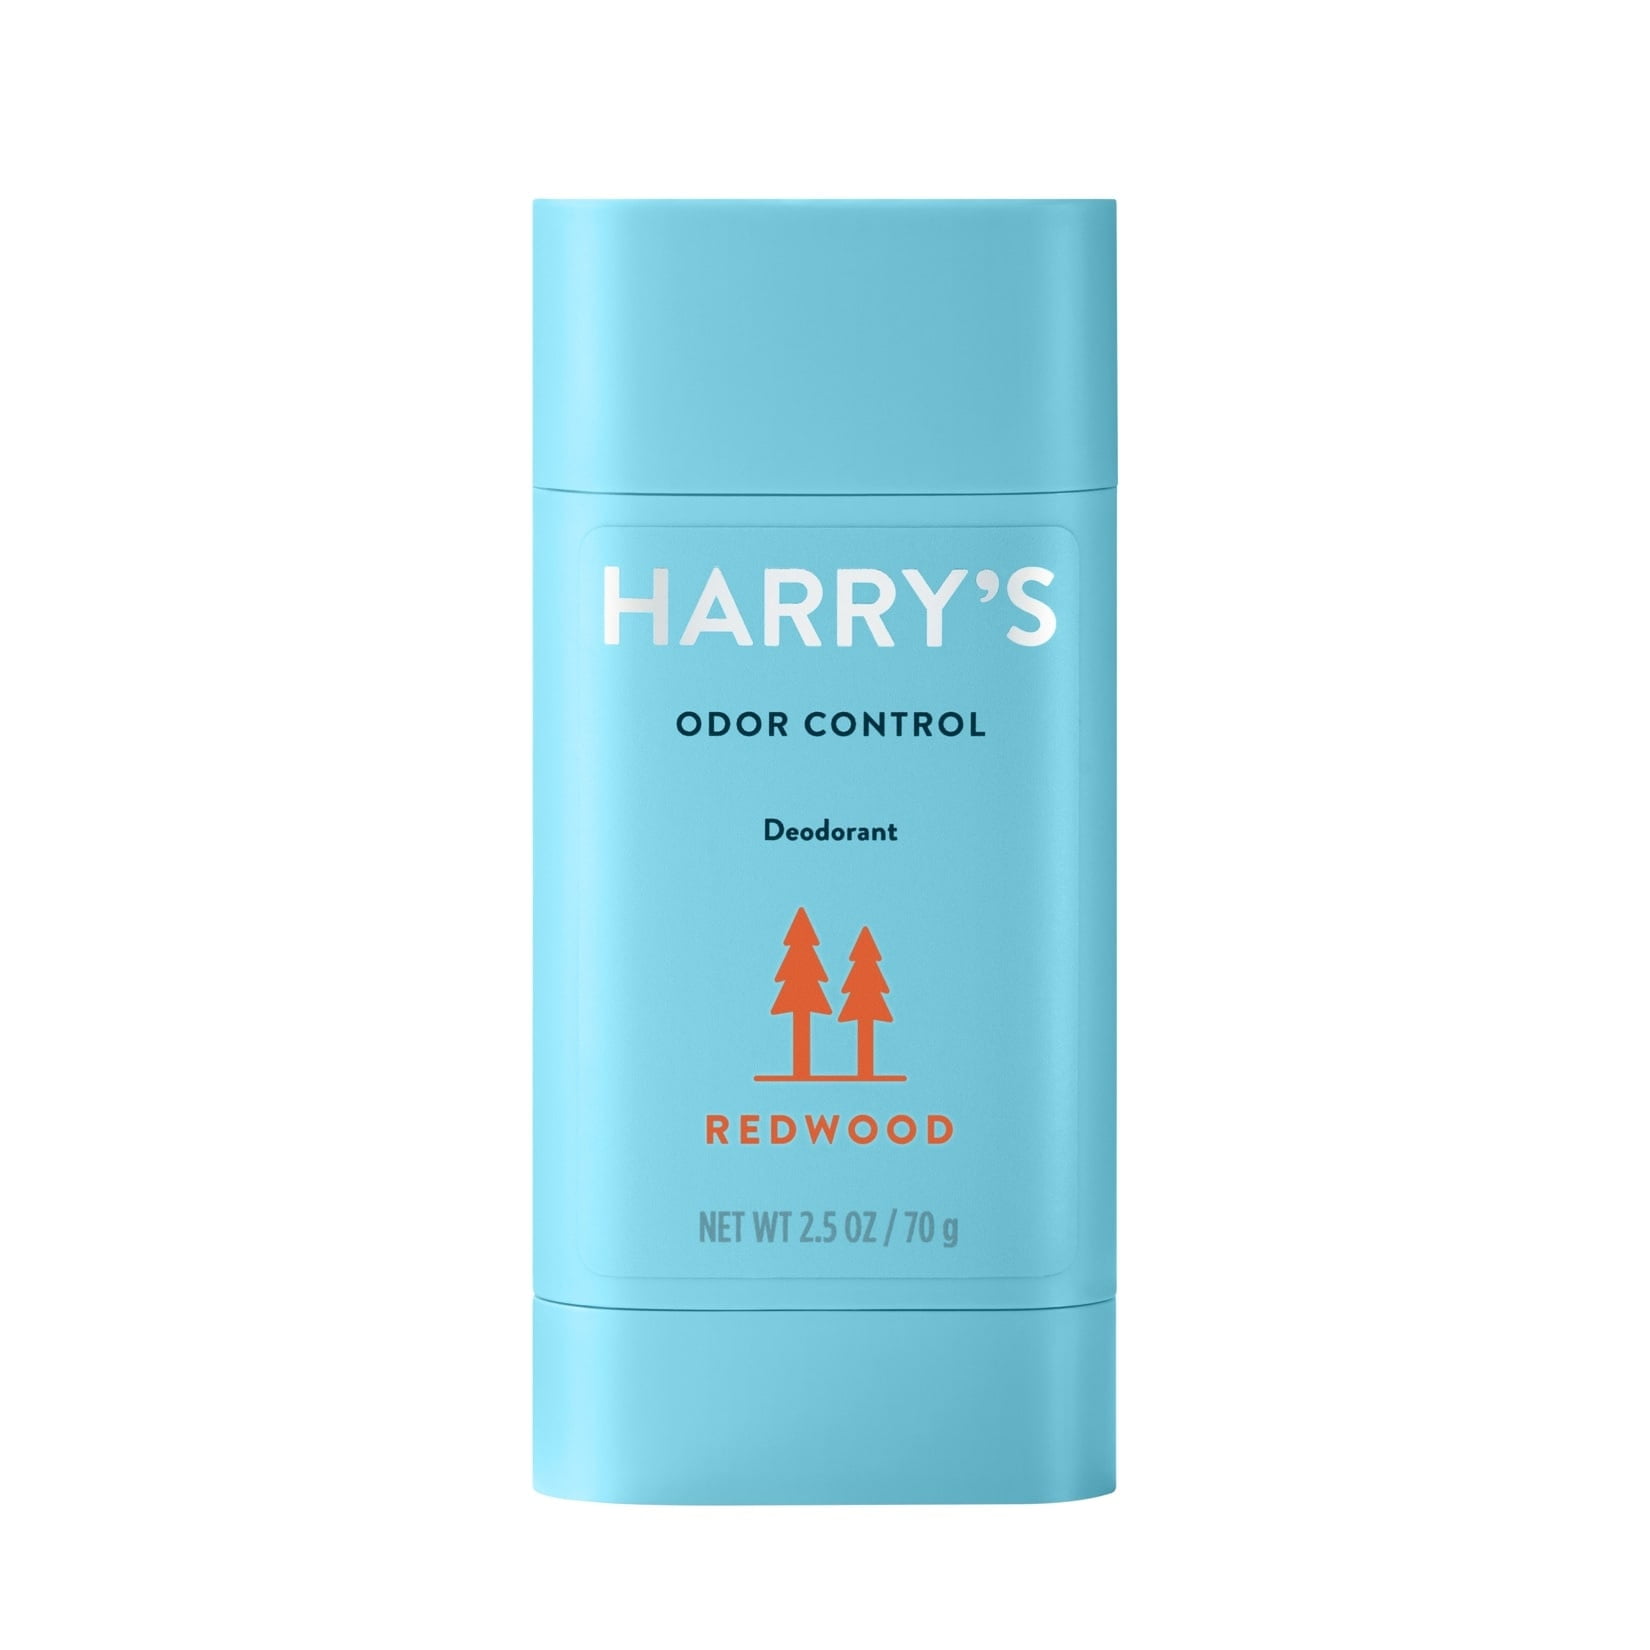 Harry's Men's Odor Protection Deodorant Stick, Redwood Scent, 2.5 oz 